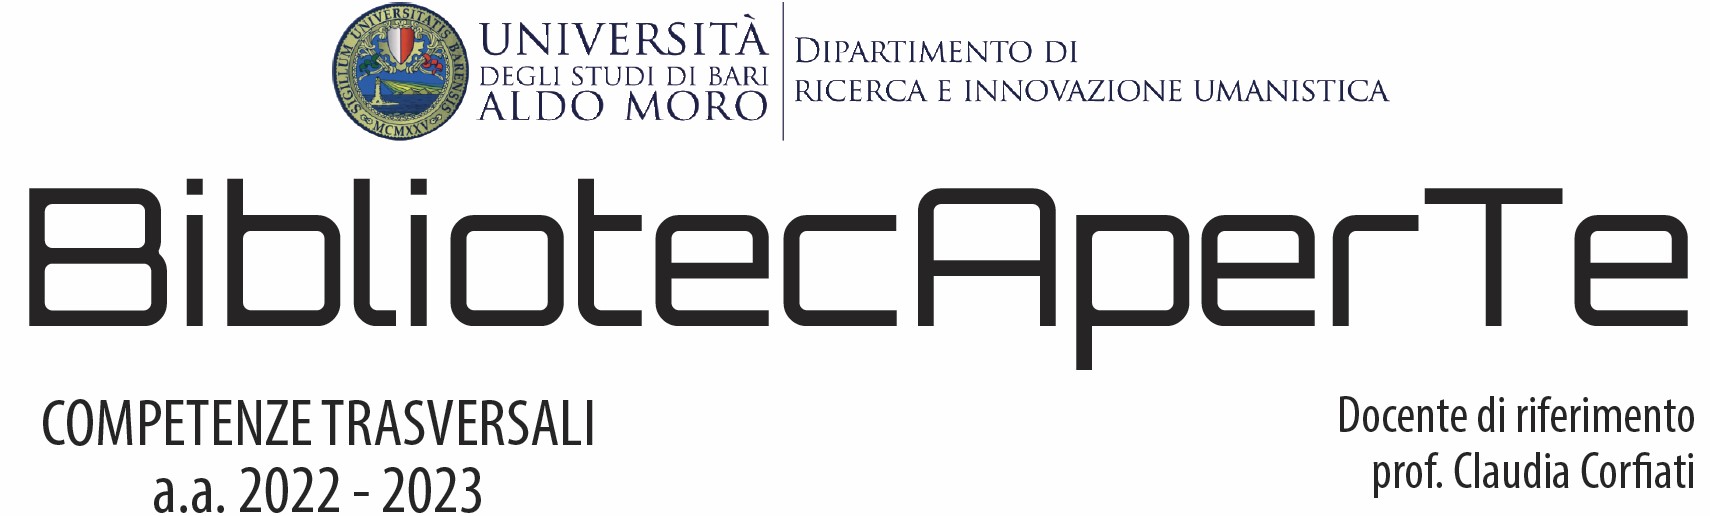 BibliotecAperTe 2023 logo.jpg